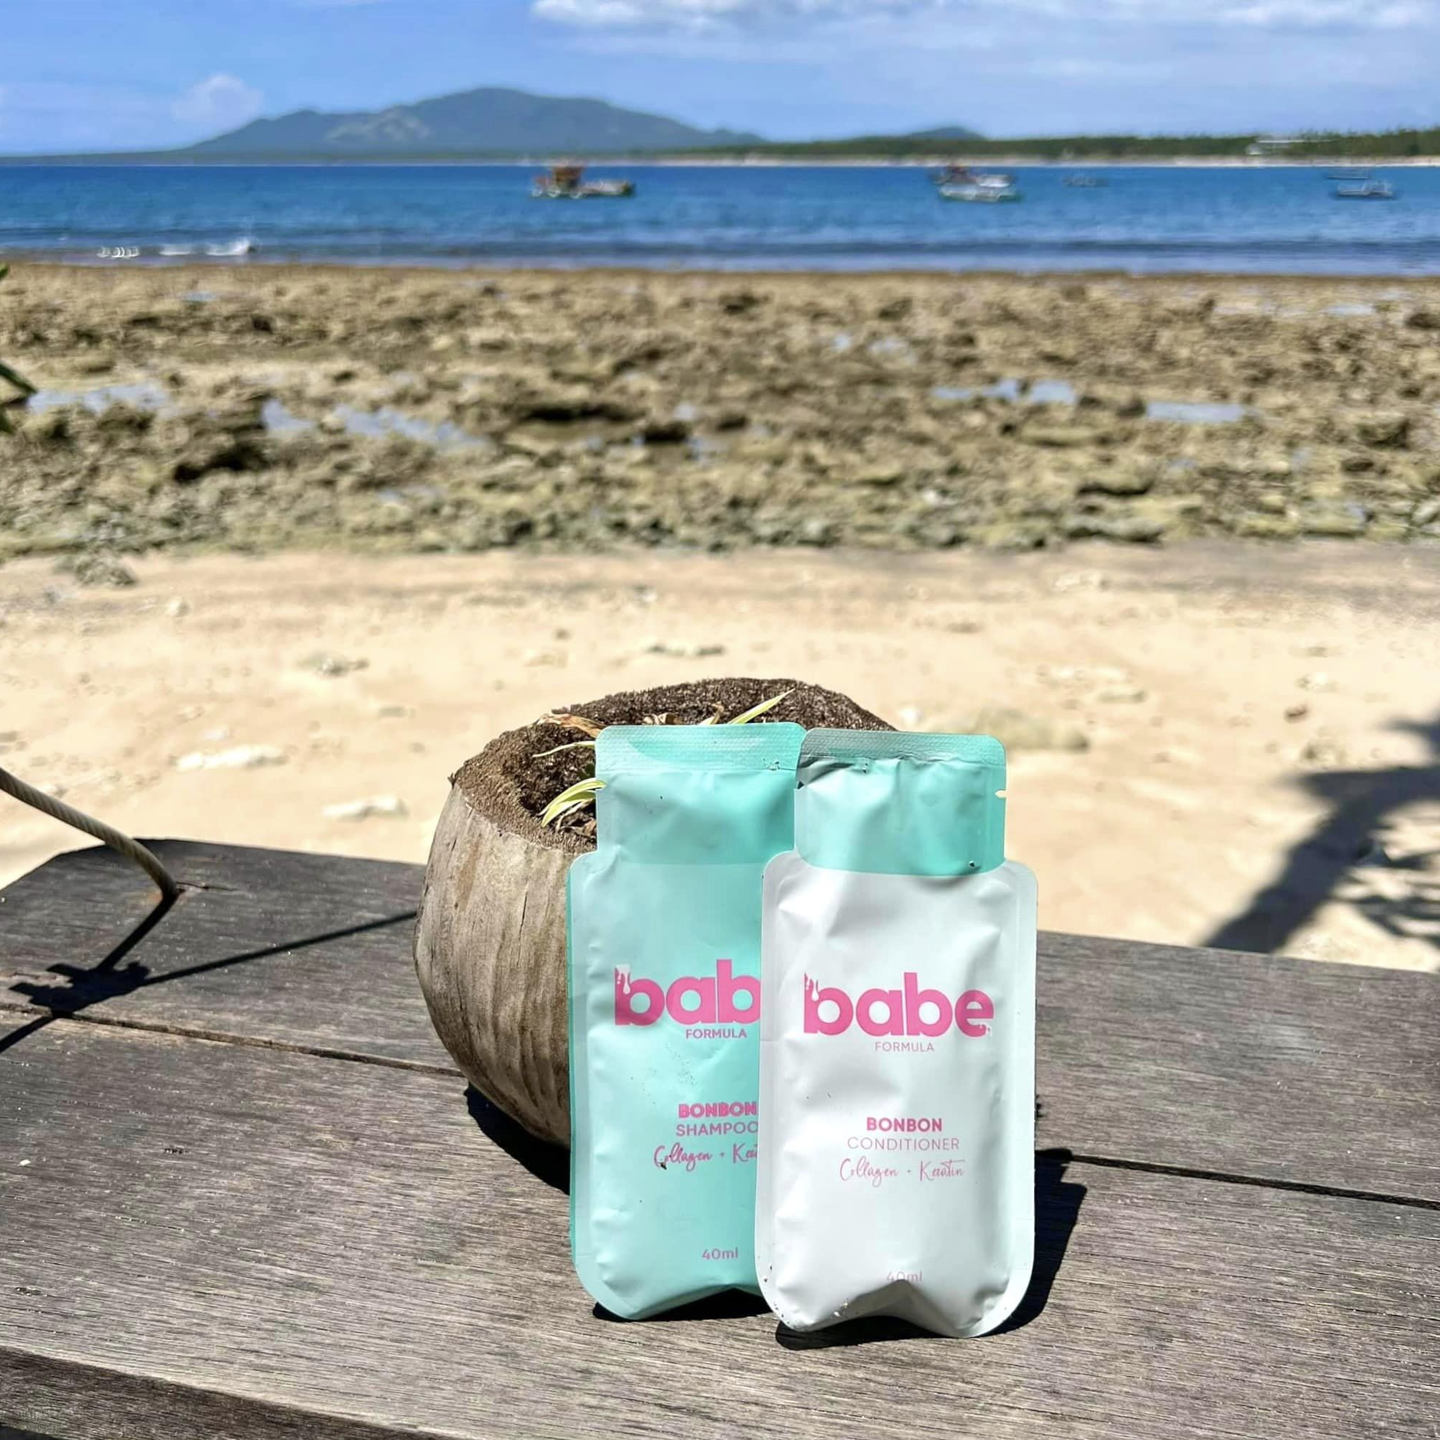 Babe Formula Bonbon Shampoo 40mL Sachet | Filipino Haircare NZ - travel